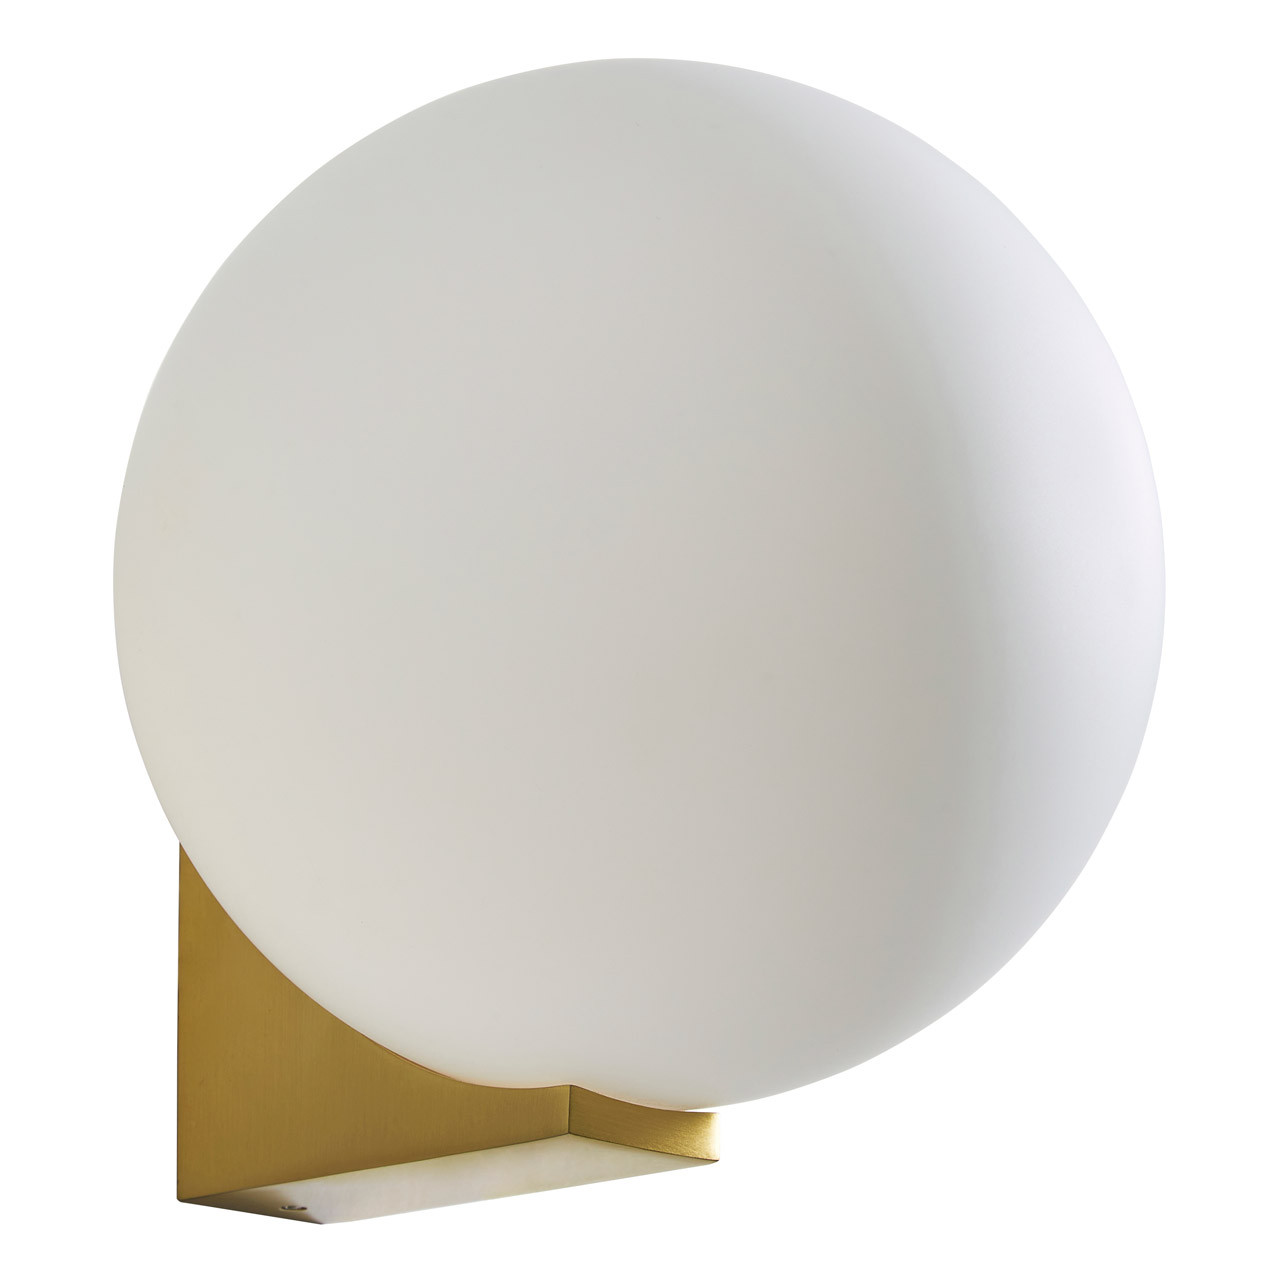 Photos - Chandelier / Lamp SPA Thiva Single Globe Wall Light Opal Glass and Satin Brass -38576-SBR 